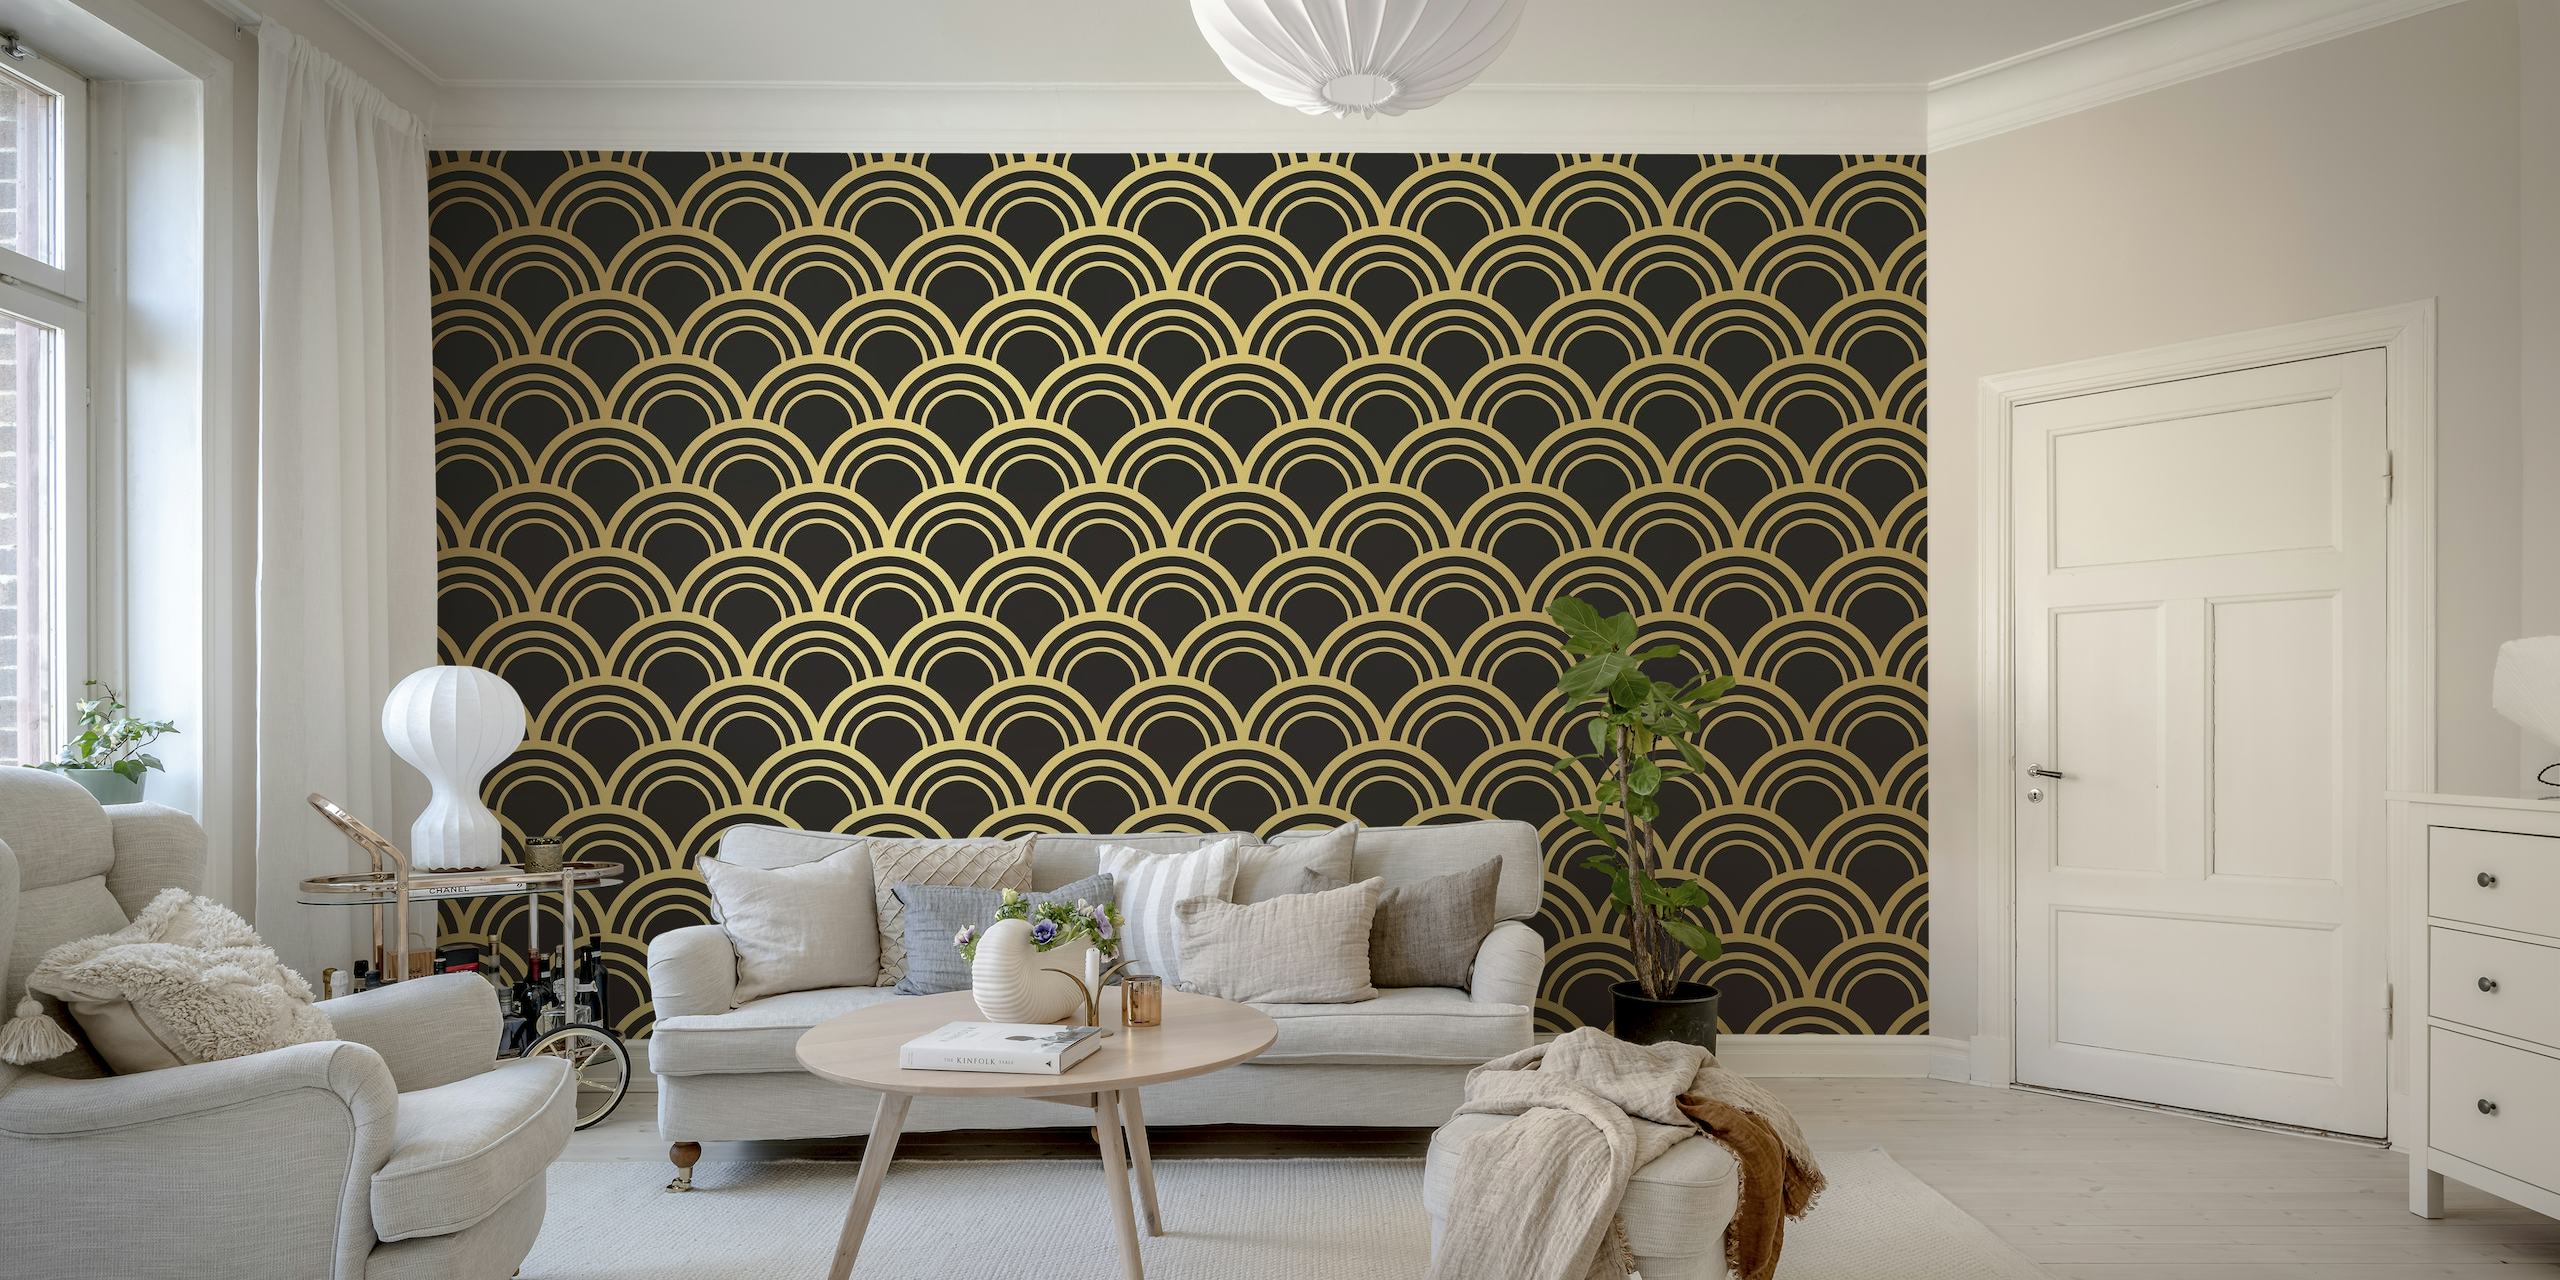 Elegant golden geometric pattern on a dark background representing an Art Deco style wall mural